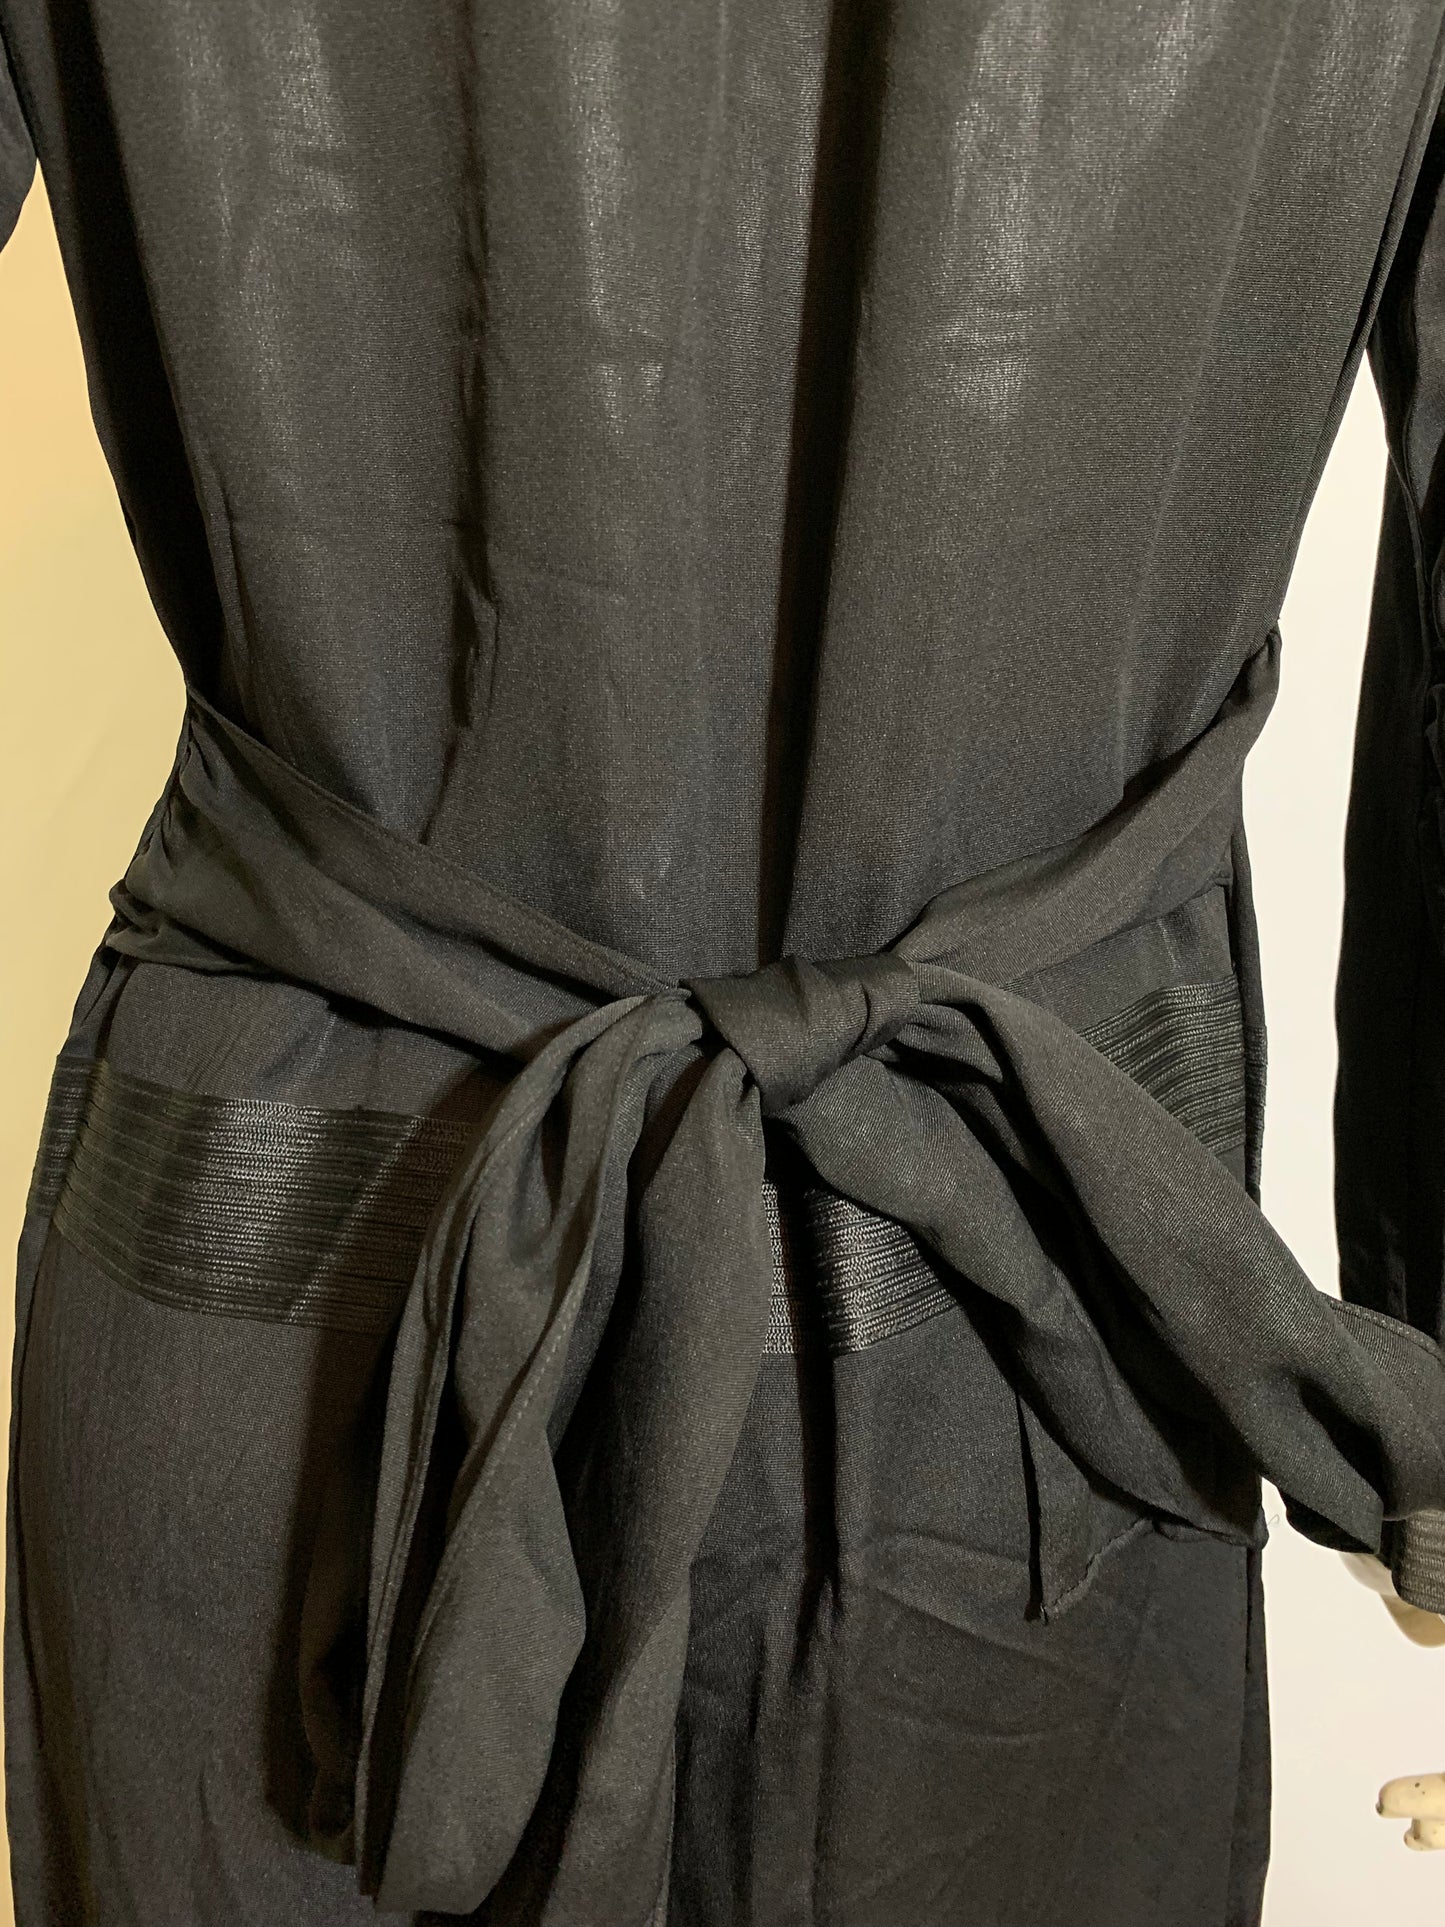 Jet Black Soutache Trimmed Dropped Waist Silk Dress circa 1920s